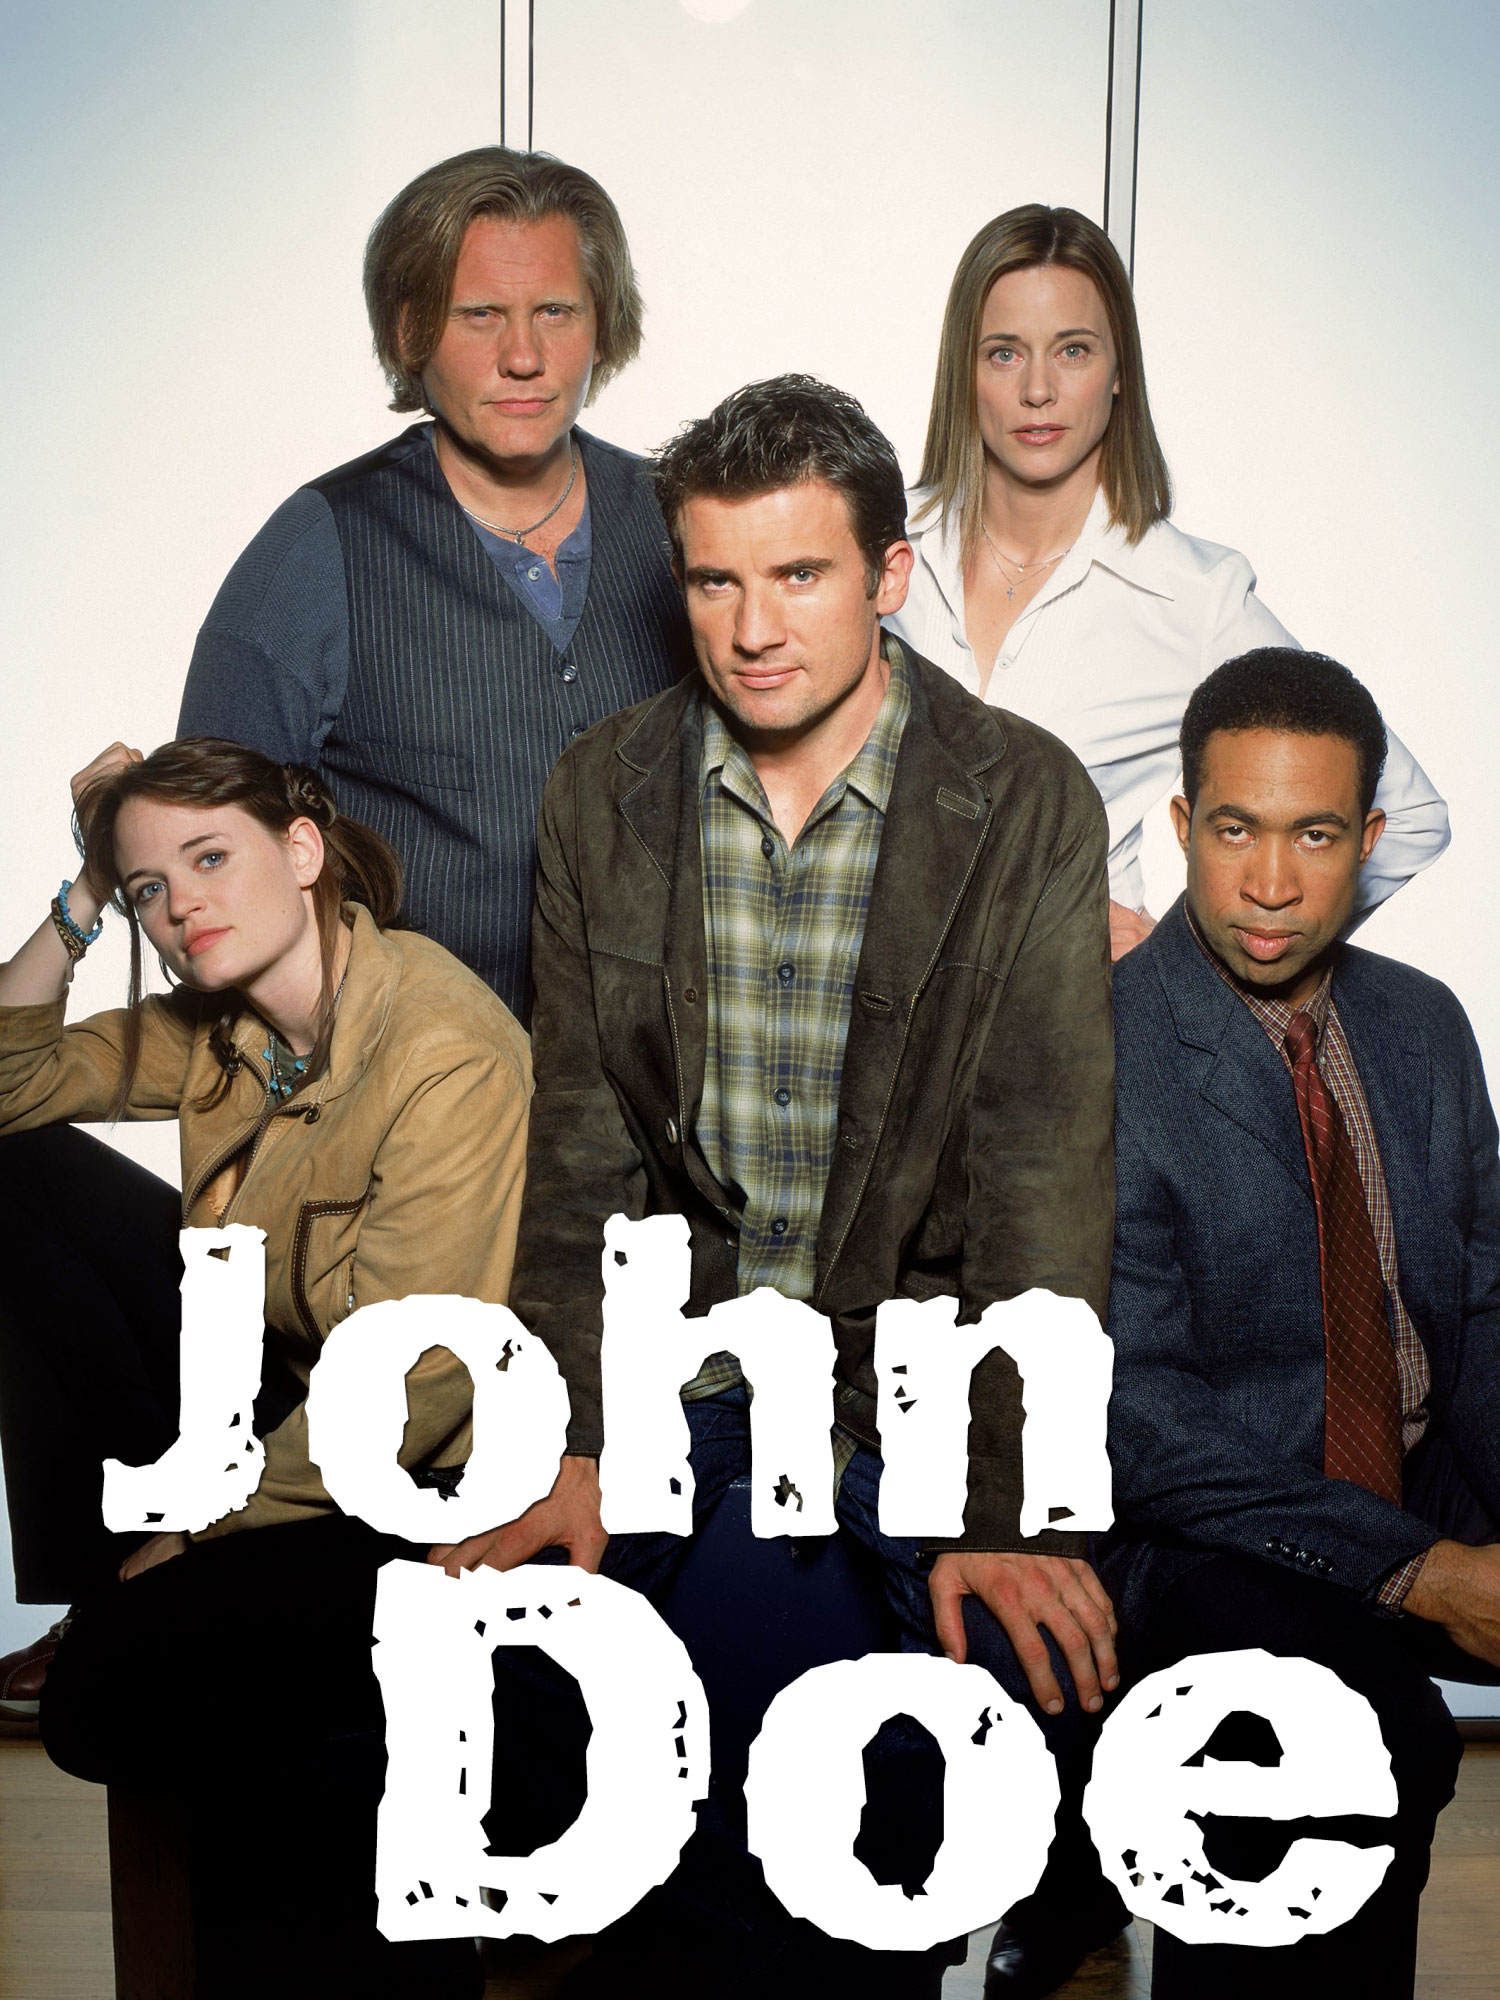 John Doe (TV series) - Wikipedia